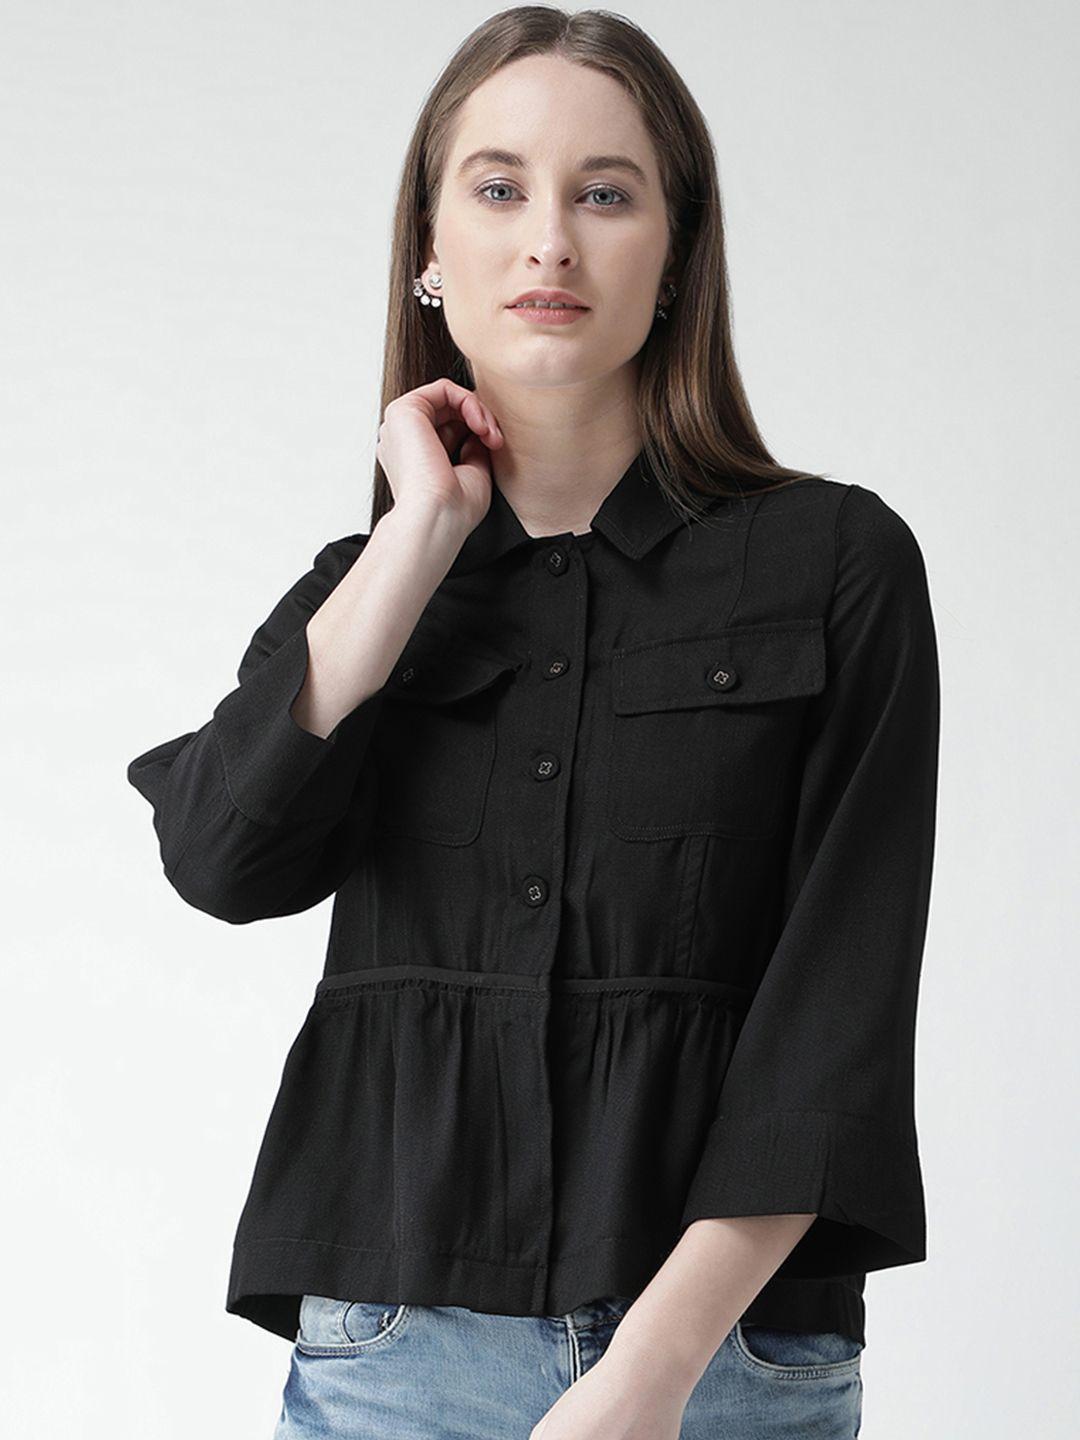 kassually women black comfort boxy solid casual shirt